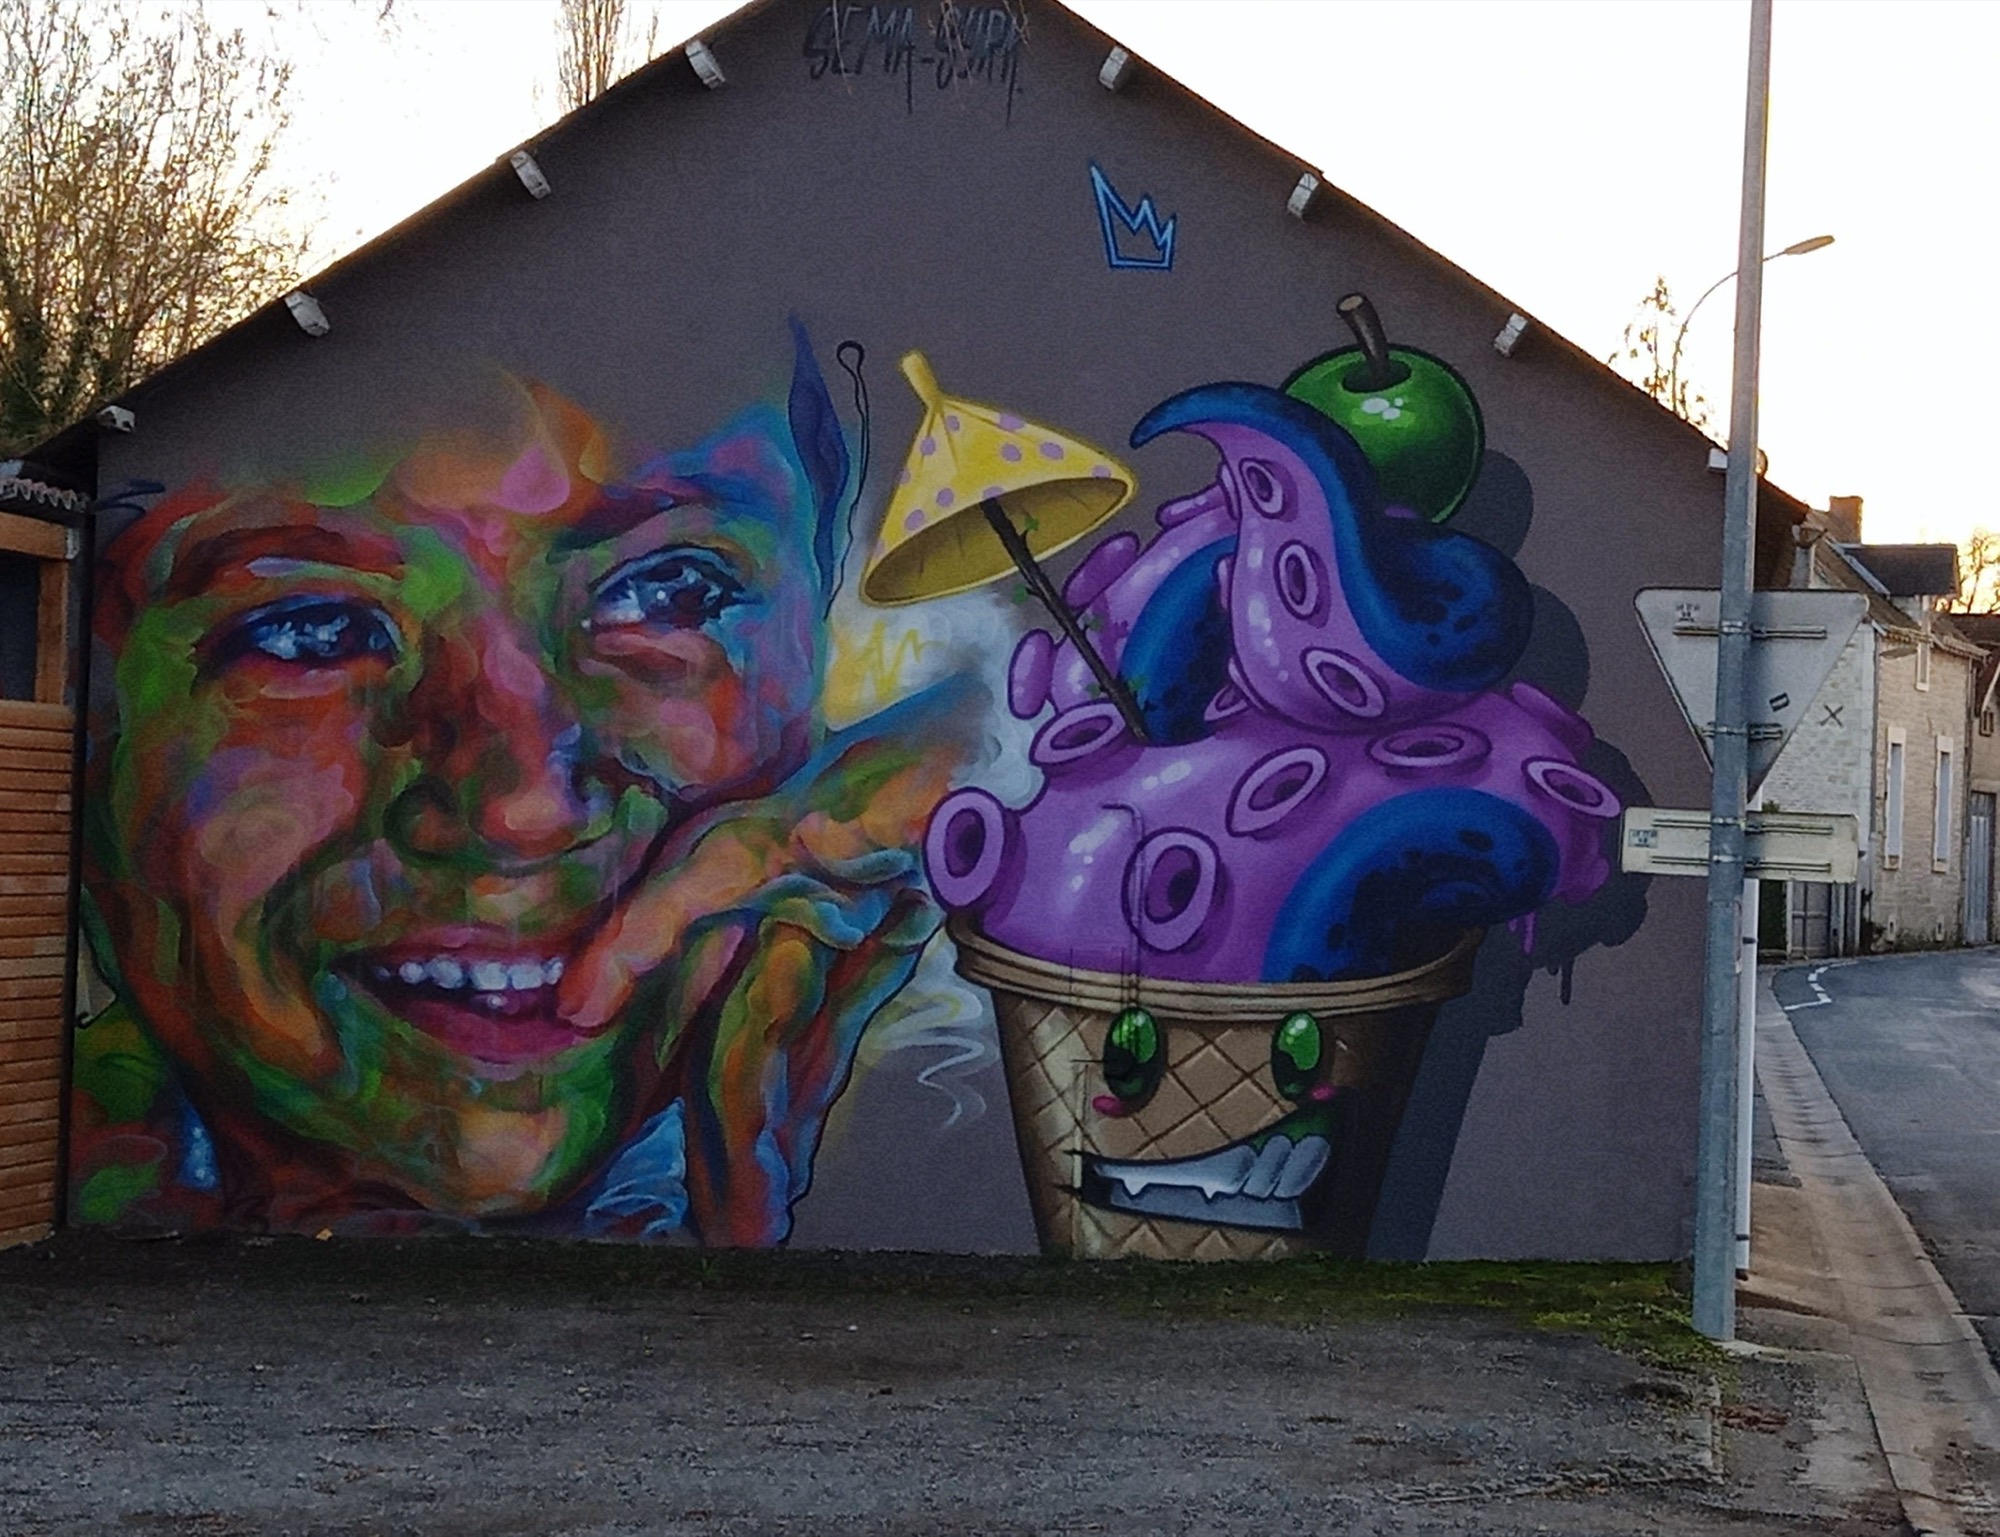 Graffiti 841 La glace au poulpe by the artist Syrk in Civray France